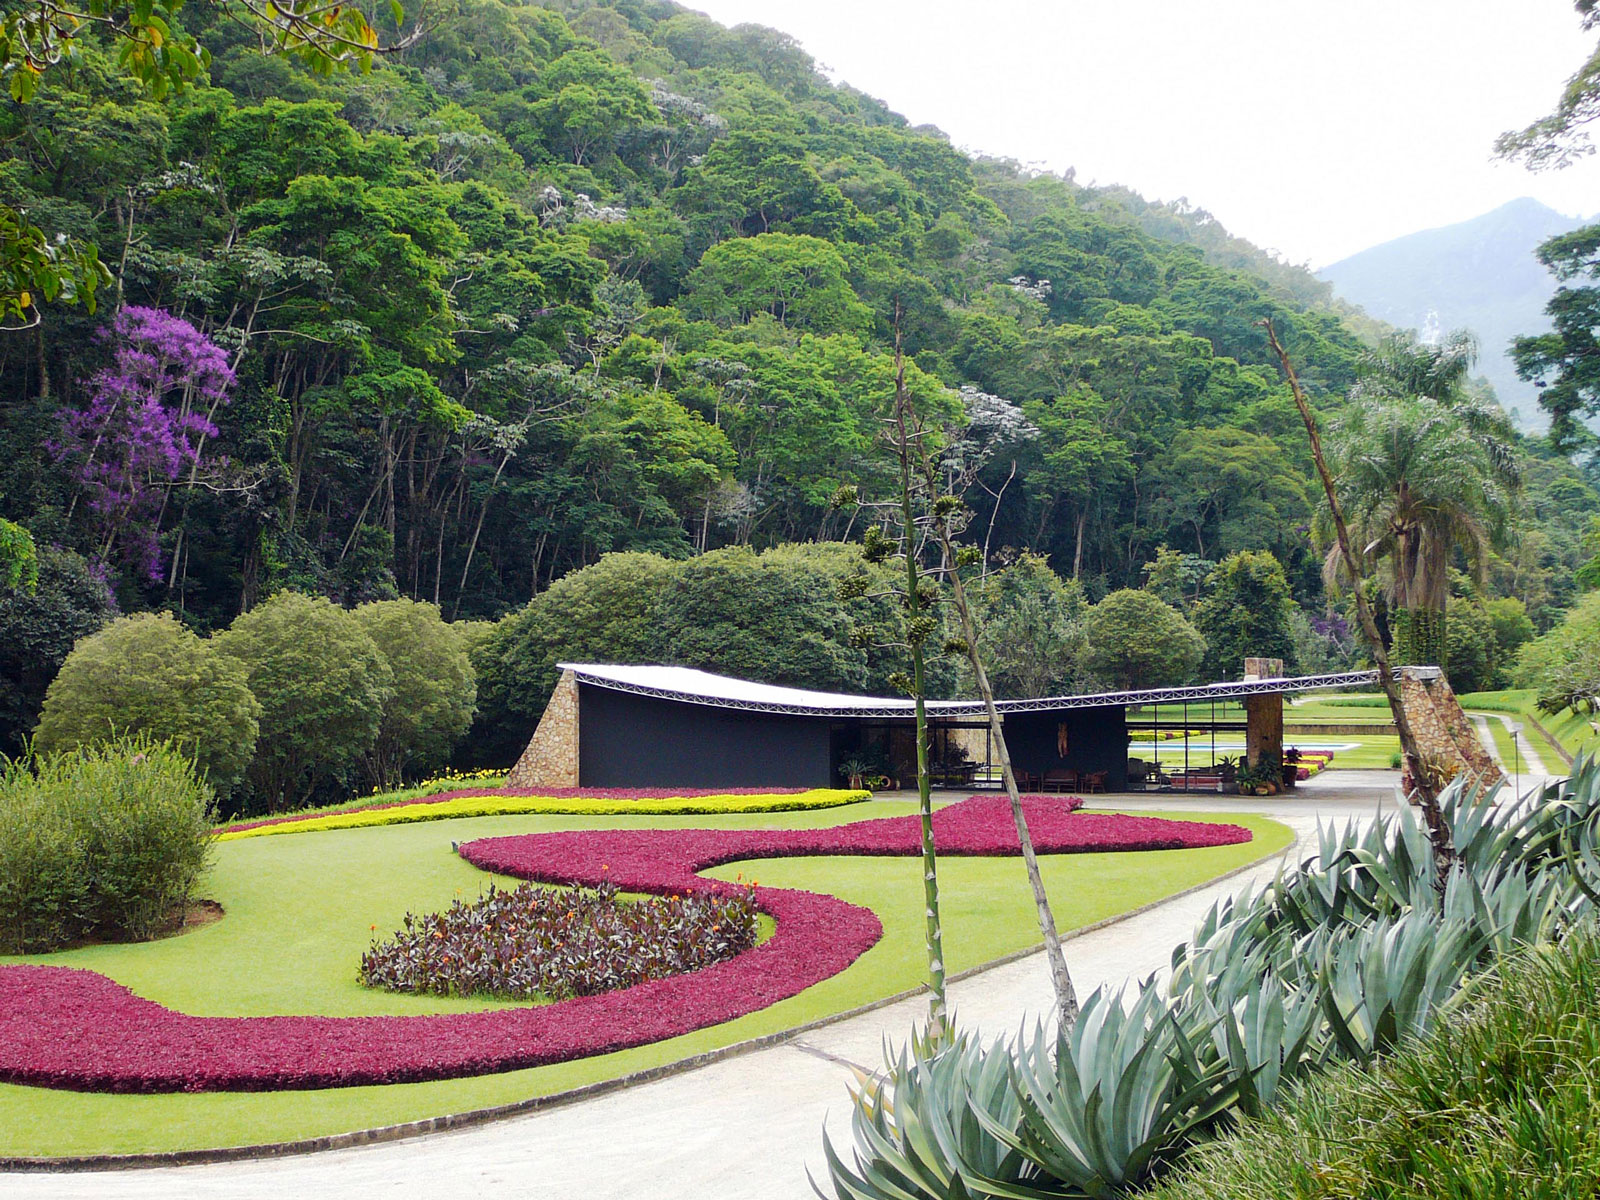 Edmundo Cavanellas Residence, designed by Oscar Niemeyer with landscape design by Roberto Burle Marx, 1954